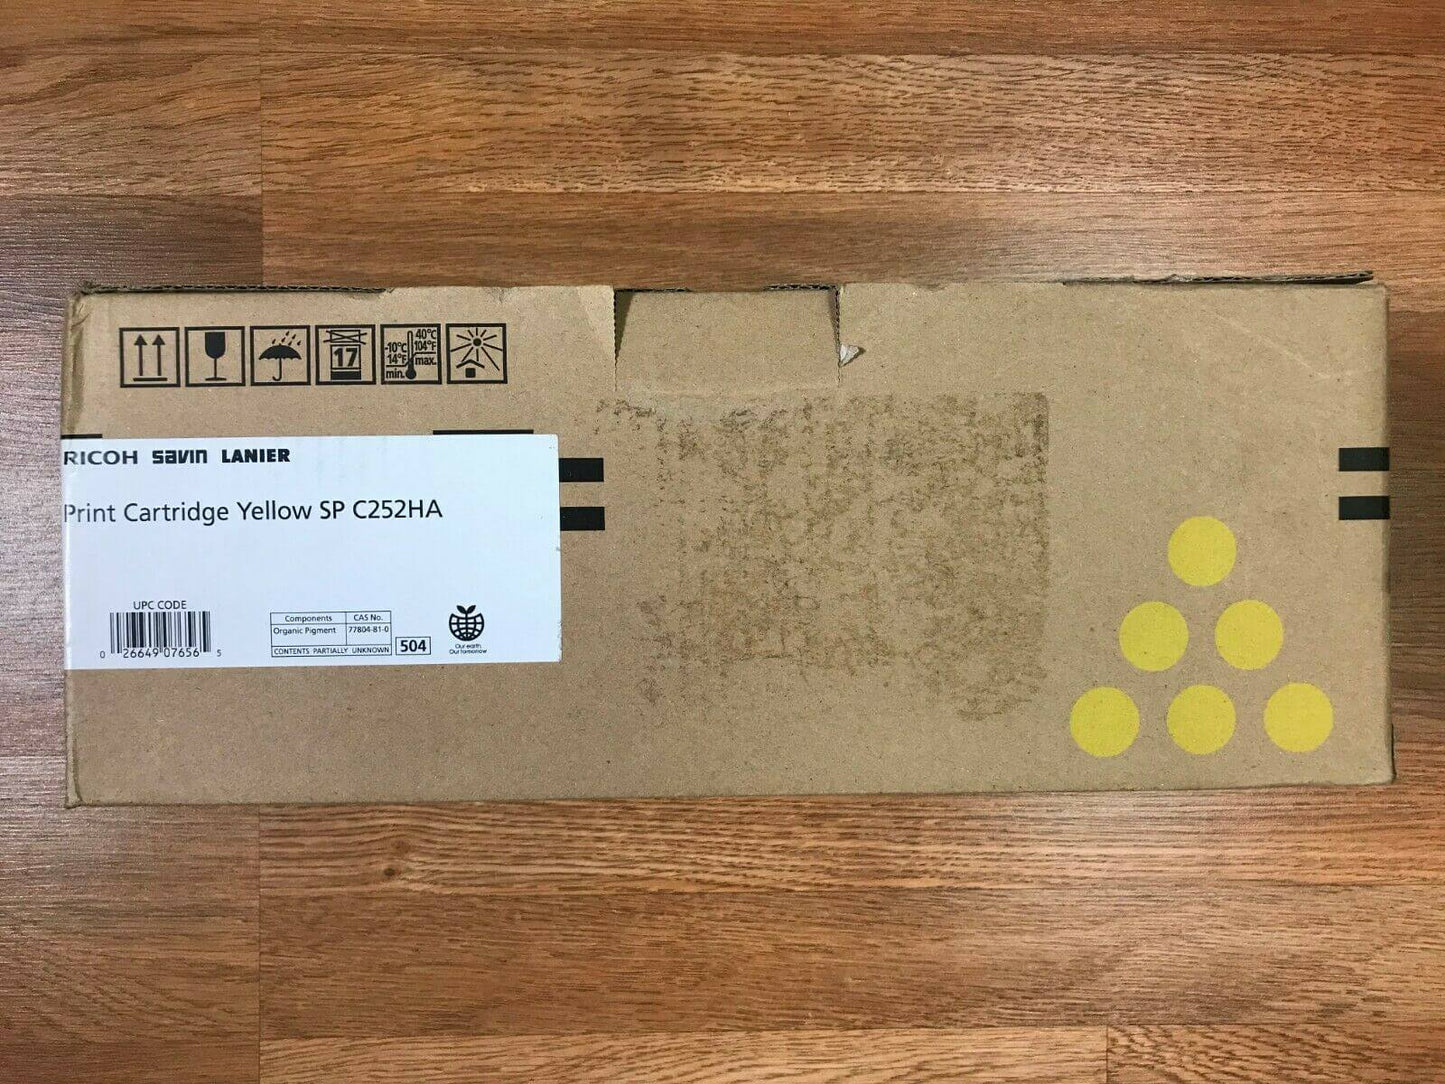 New-Bad Box Ricoh SP C252HA Yellow Print Cartridge 407656 *Same Day Shipping!!!* - copier-clearance-center